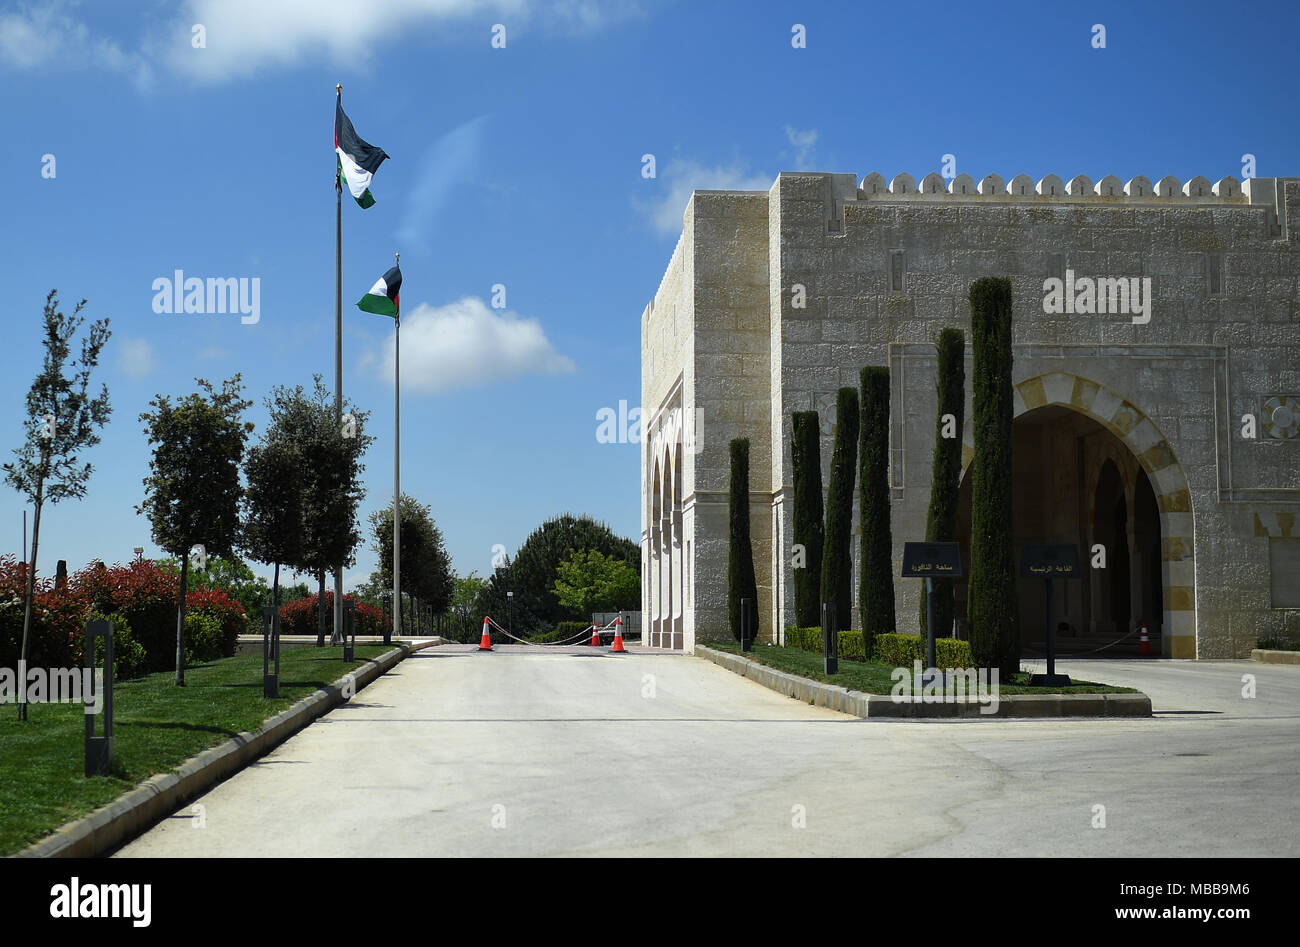 Amman Jordan Royal Palace High Resolution Stock Photography and Images -  Alamy